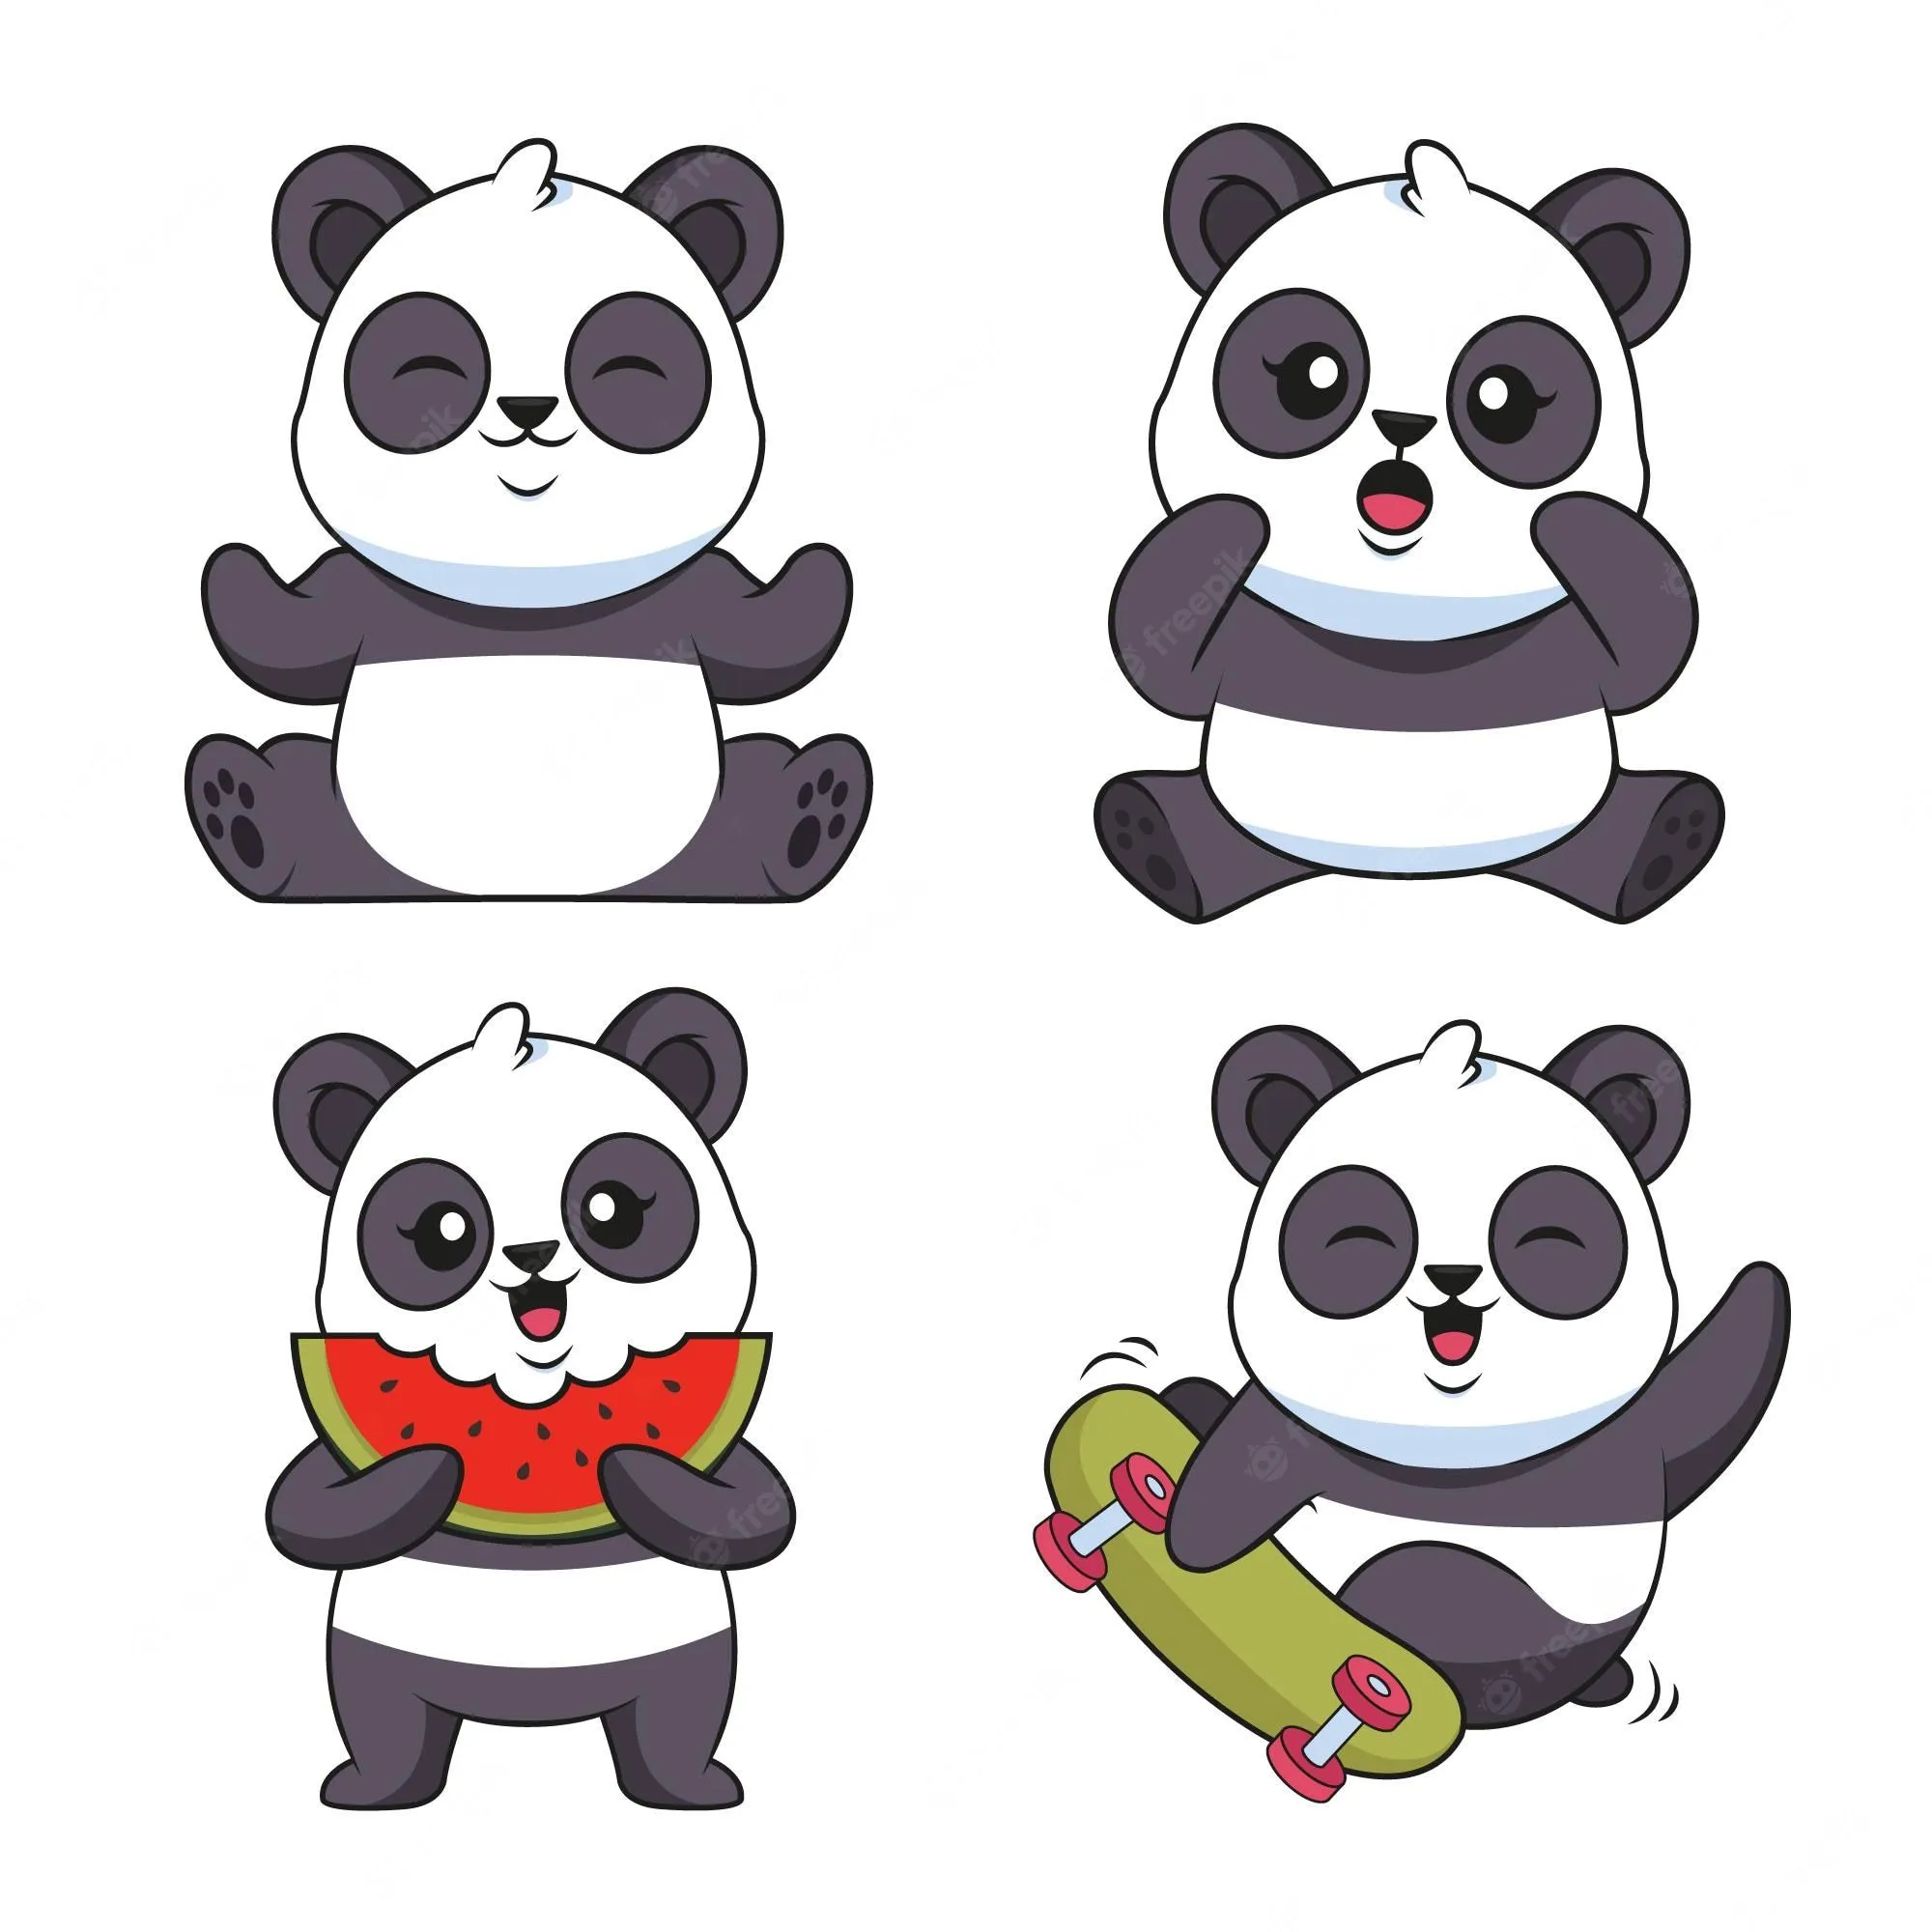 Vectores e ilustraciones de Oso panda para descargar gratis | Freepik